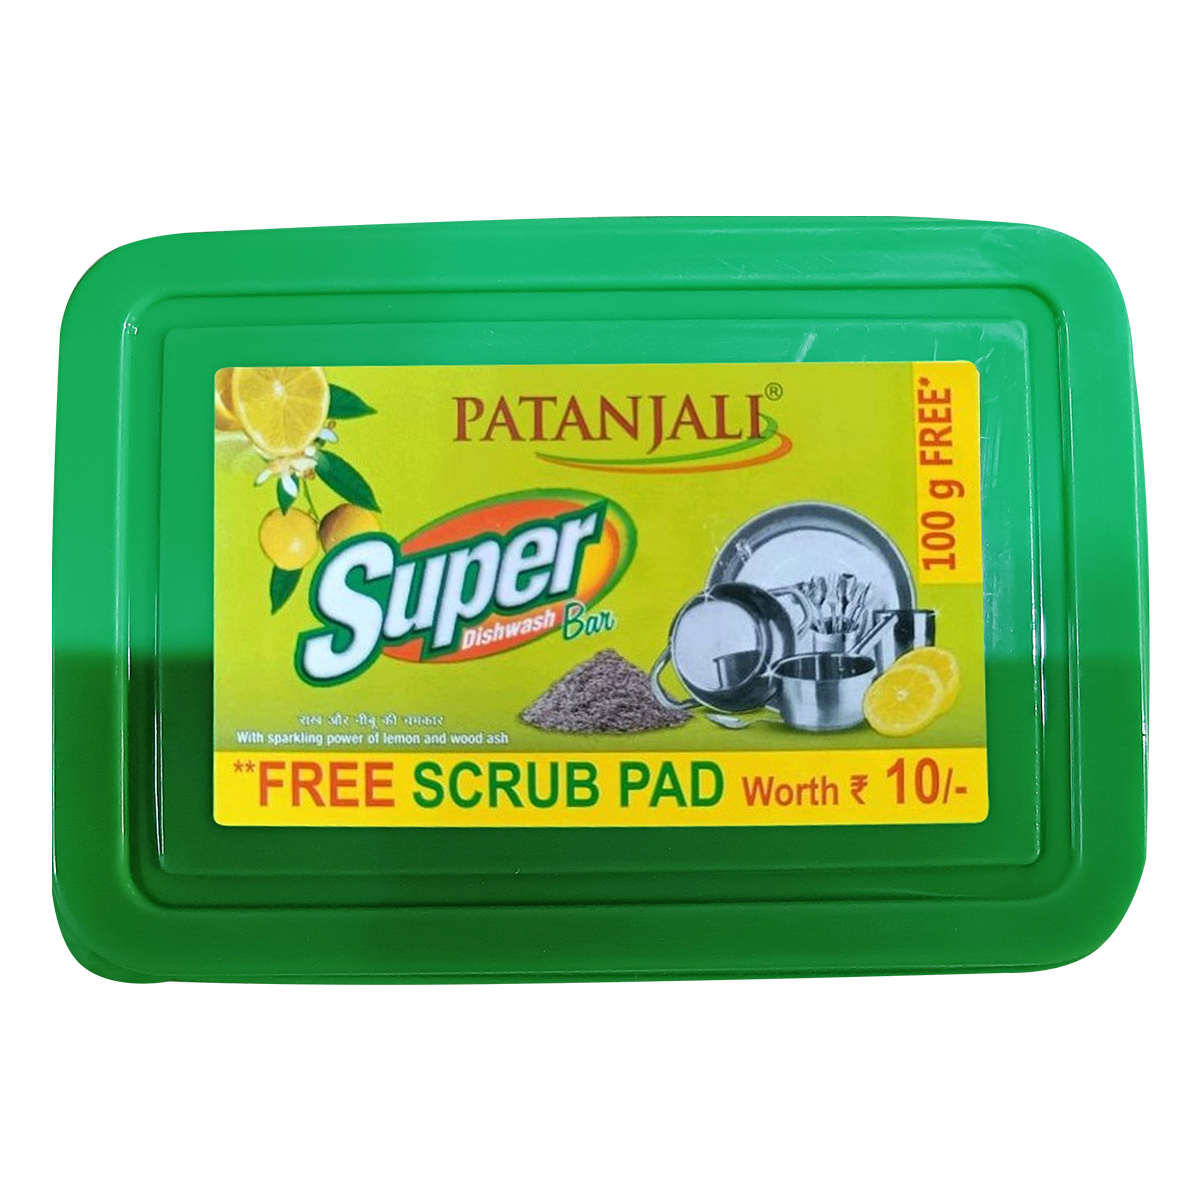 Patanjali Dishwash Bar-600g (500g+100g)+ Scrub Pad